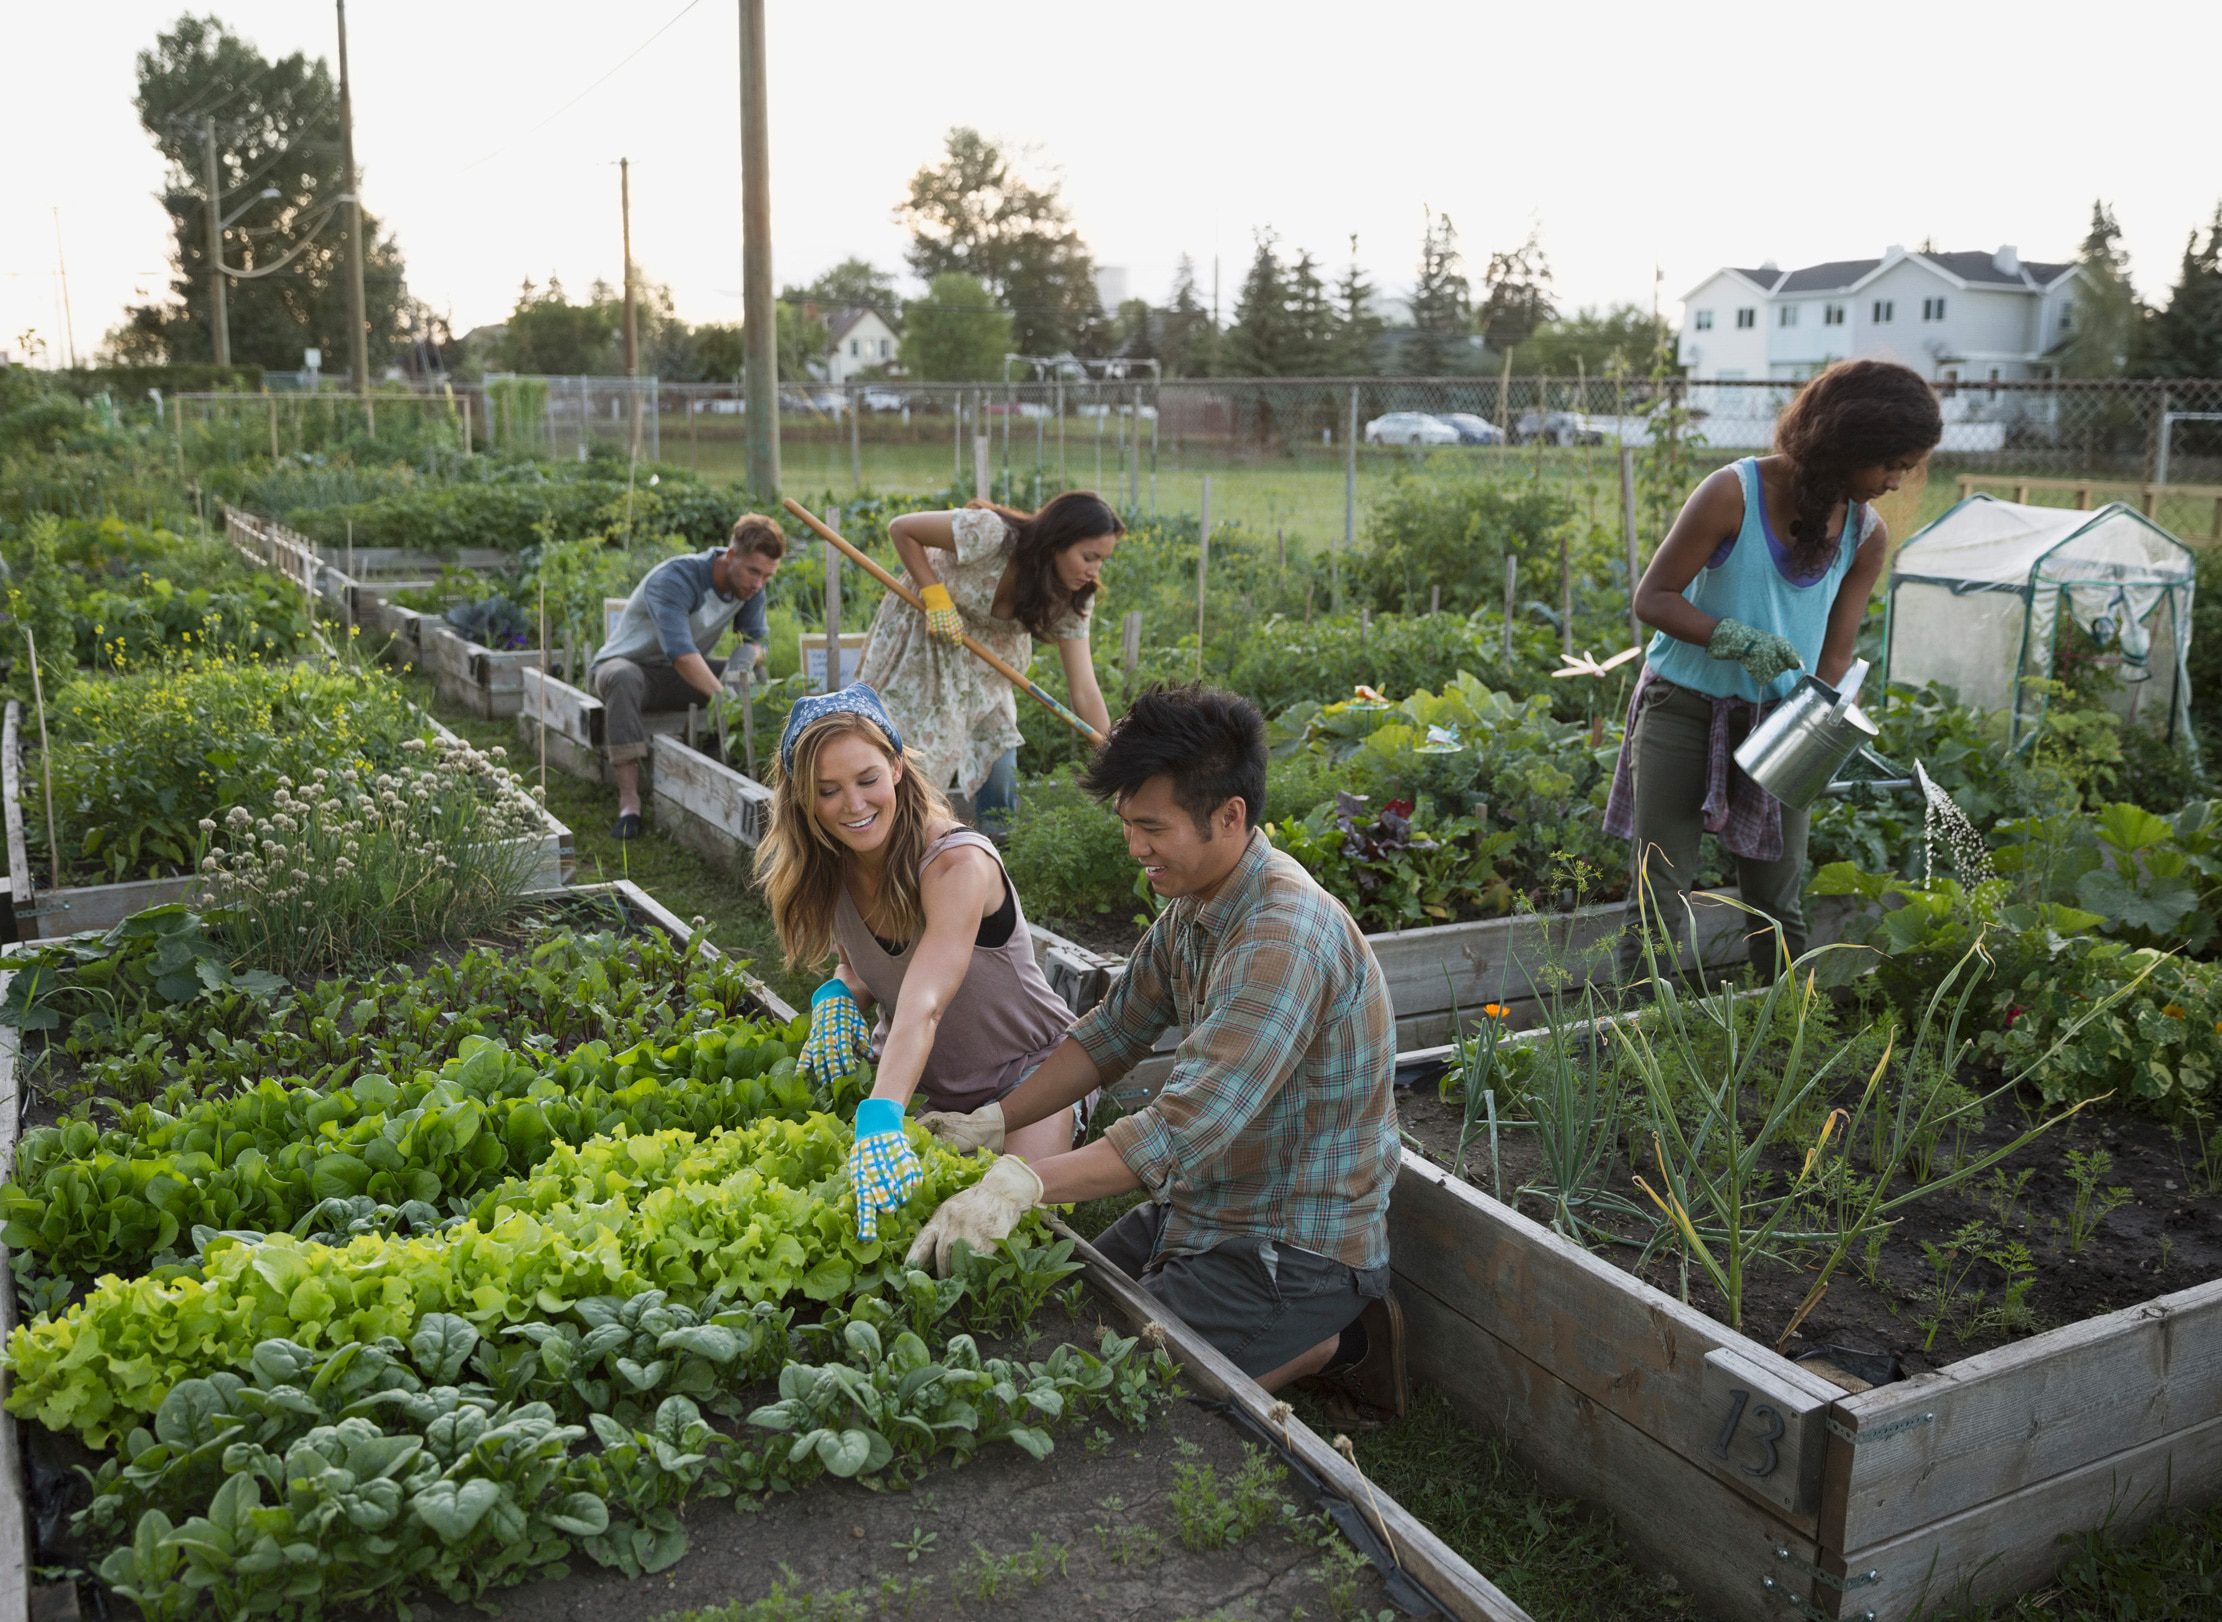 People tending to plants in vegetables garden boxes